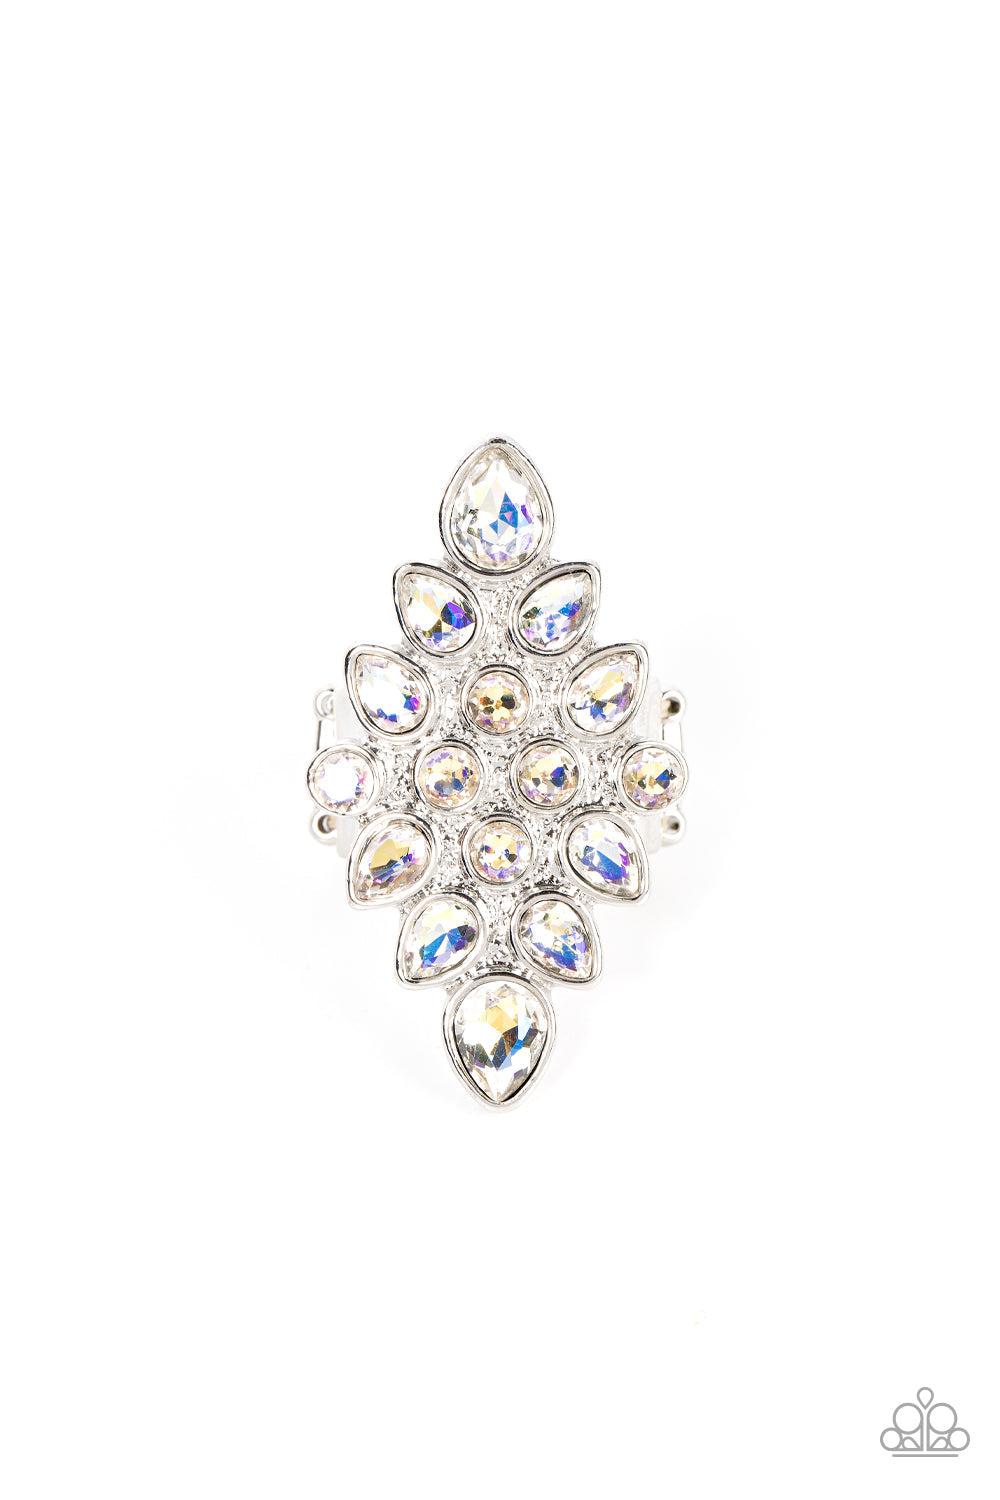 Combustible Iridescence White Iridescent Rhinestone Ring - Paparazzi Accessories- lightbox - CarasShop.com - $5 Jewelry by Cara Jewels